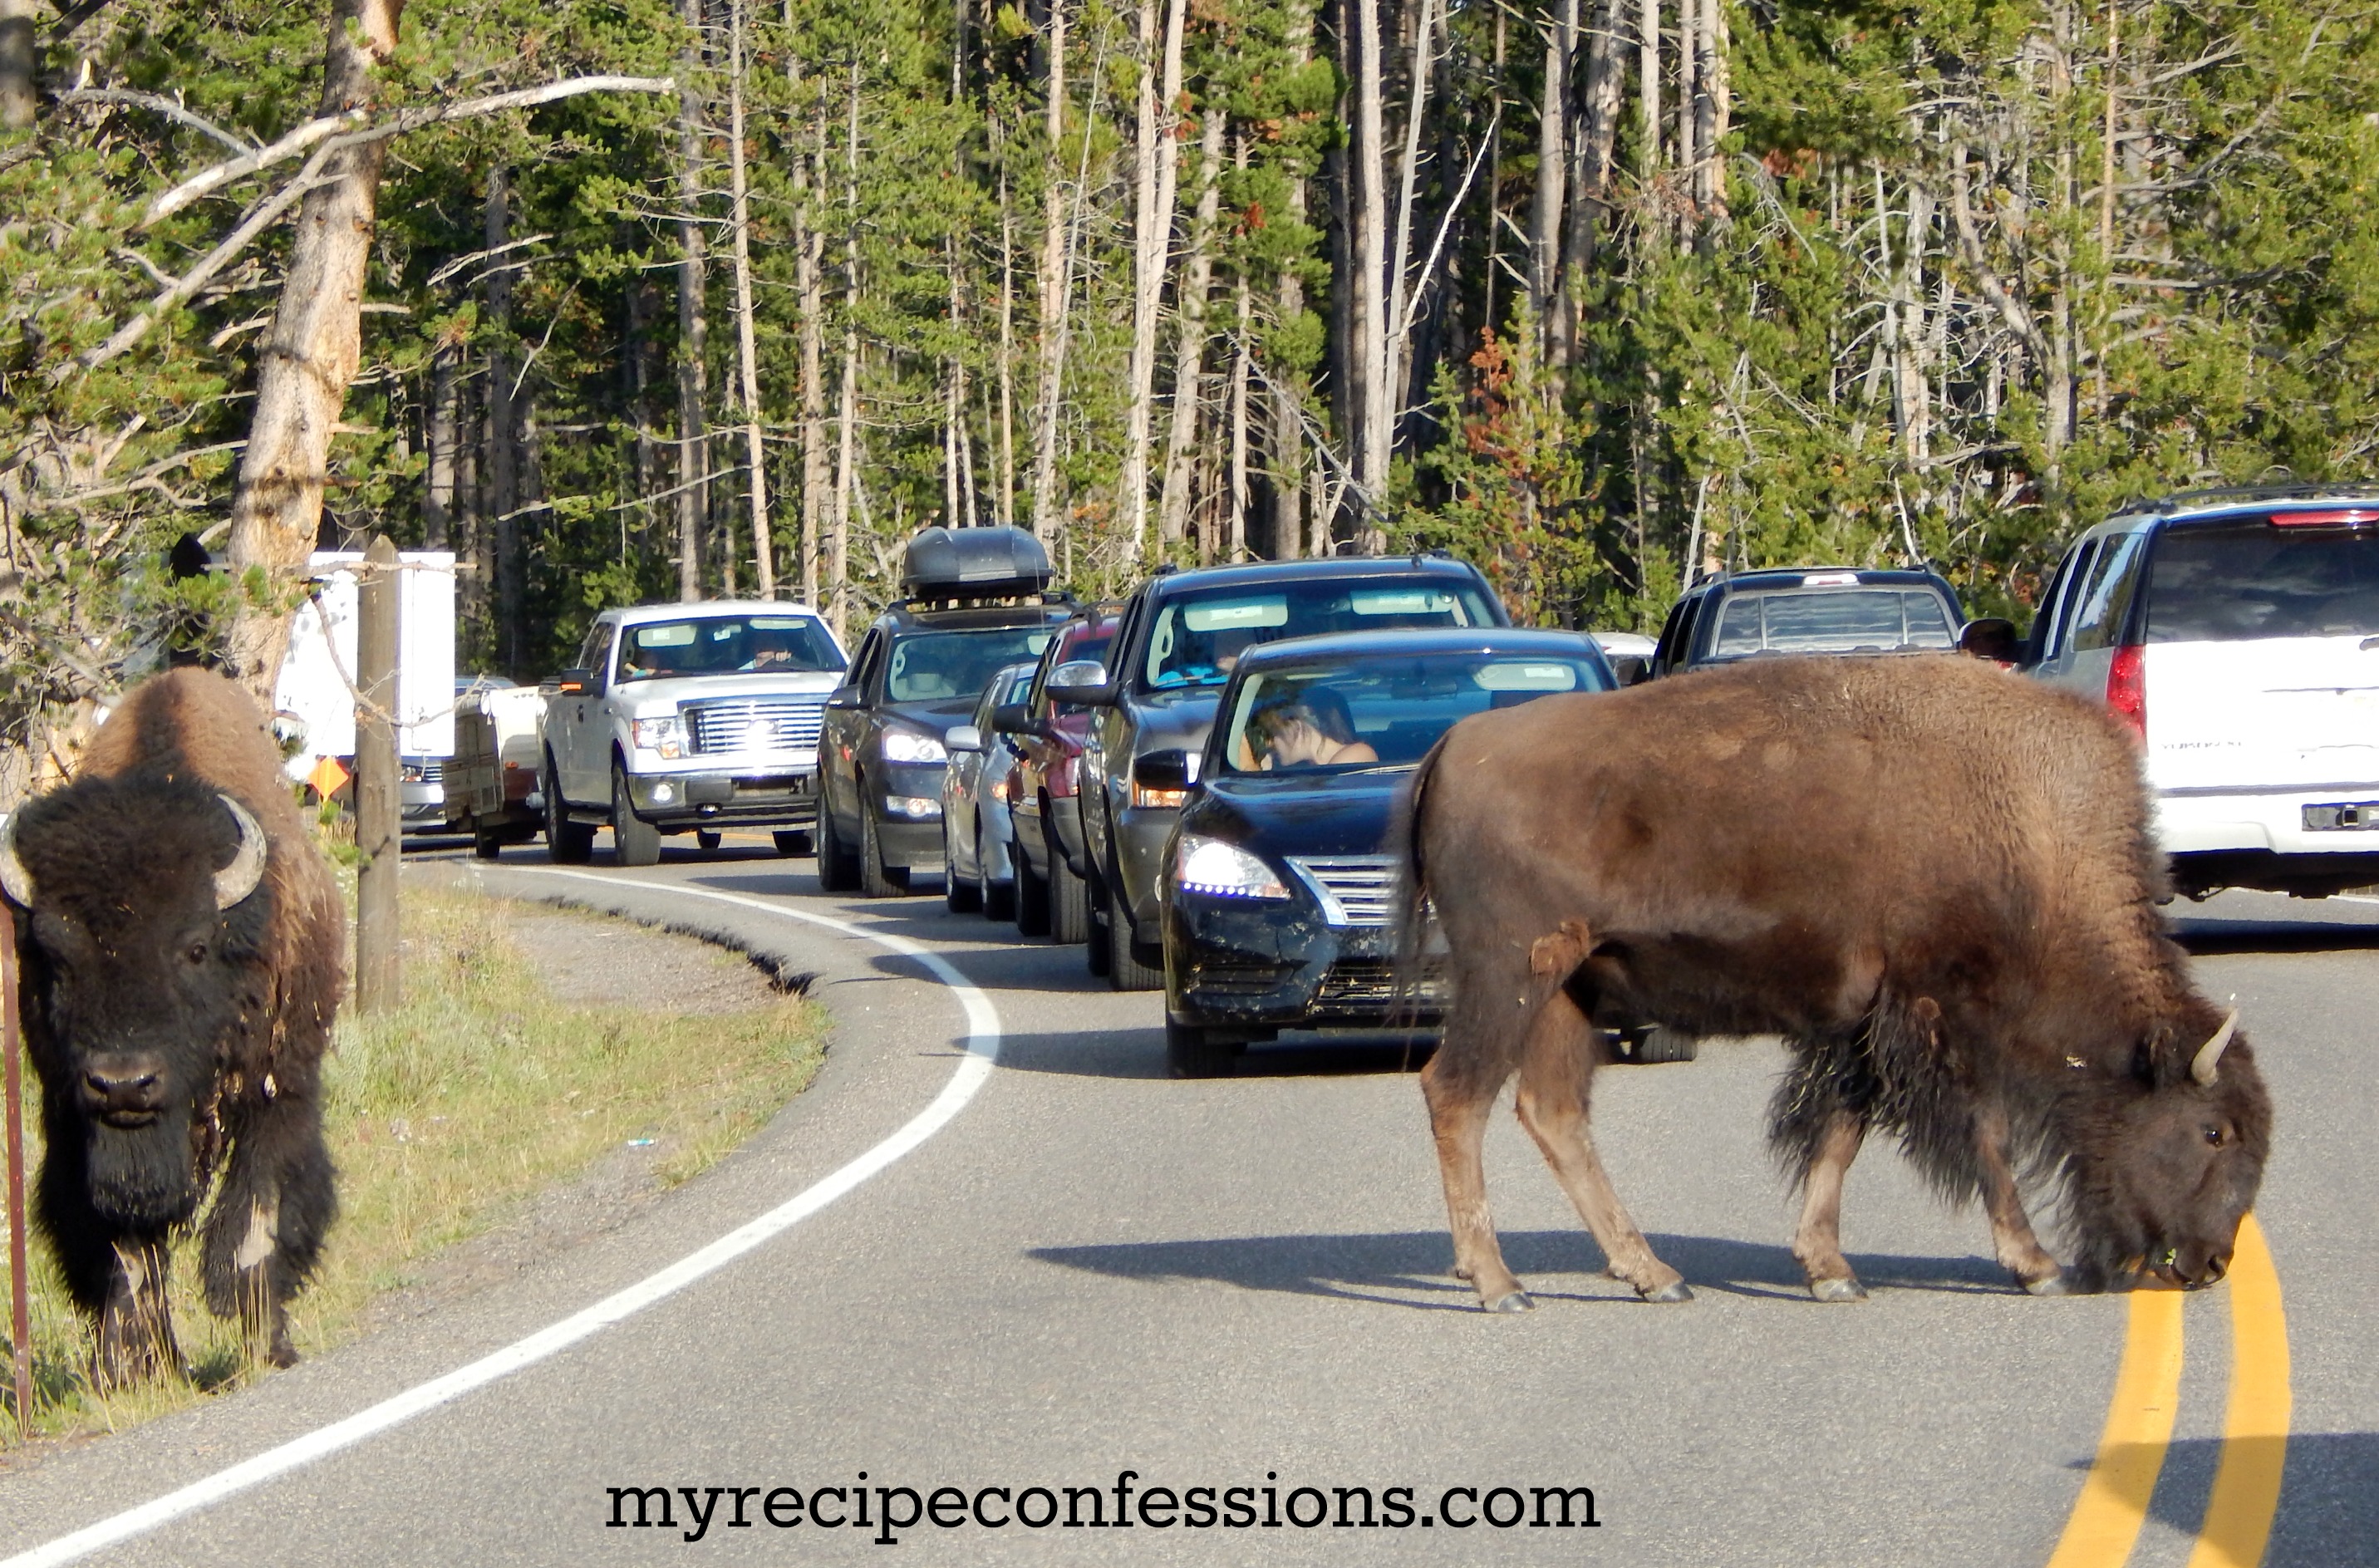 Buffalo crossing